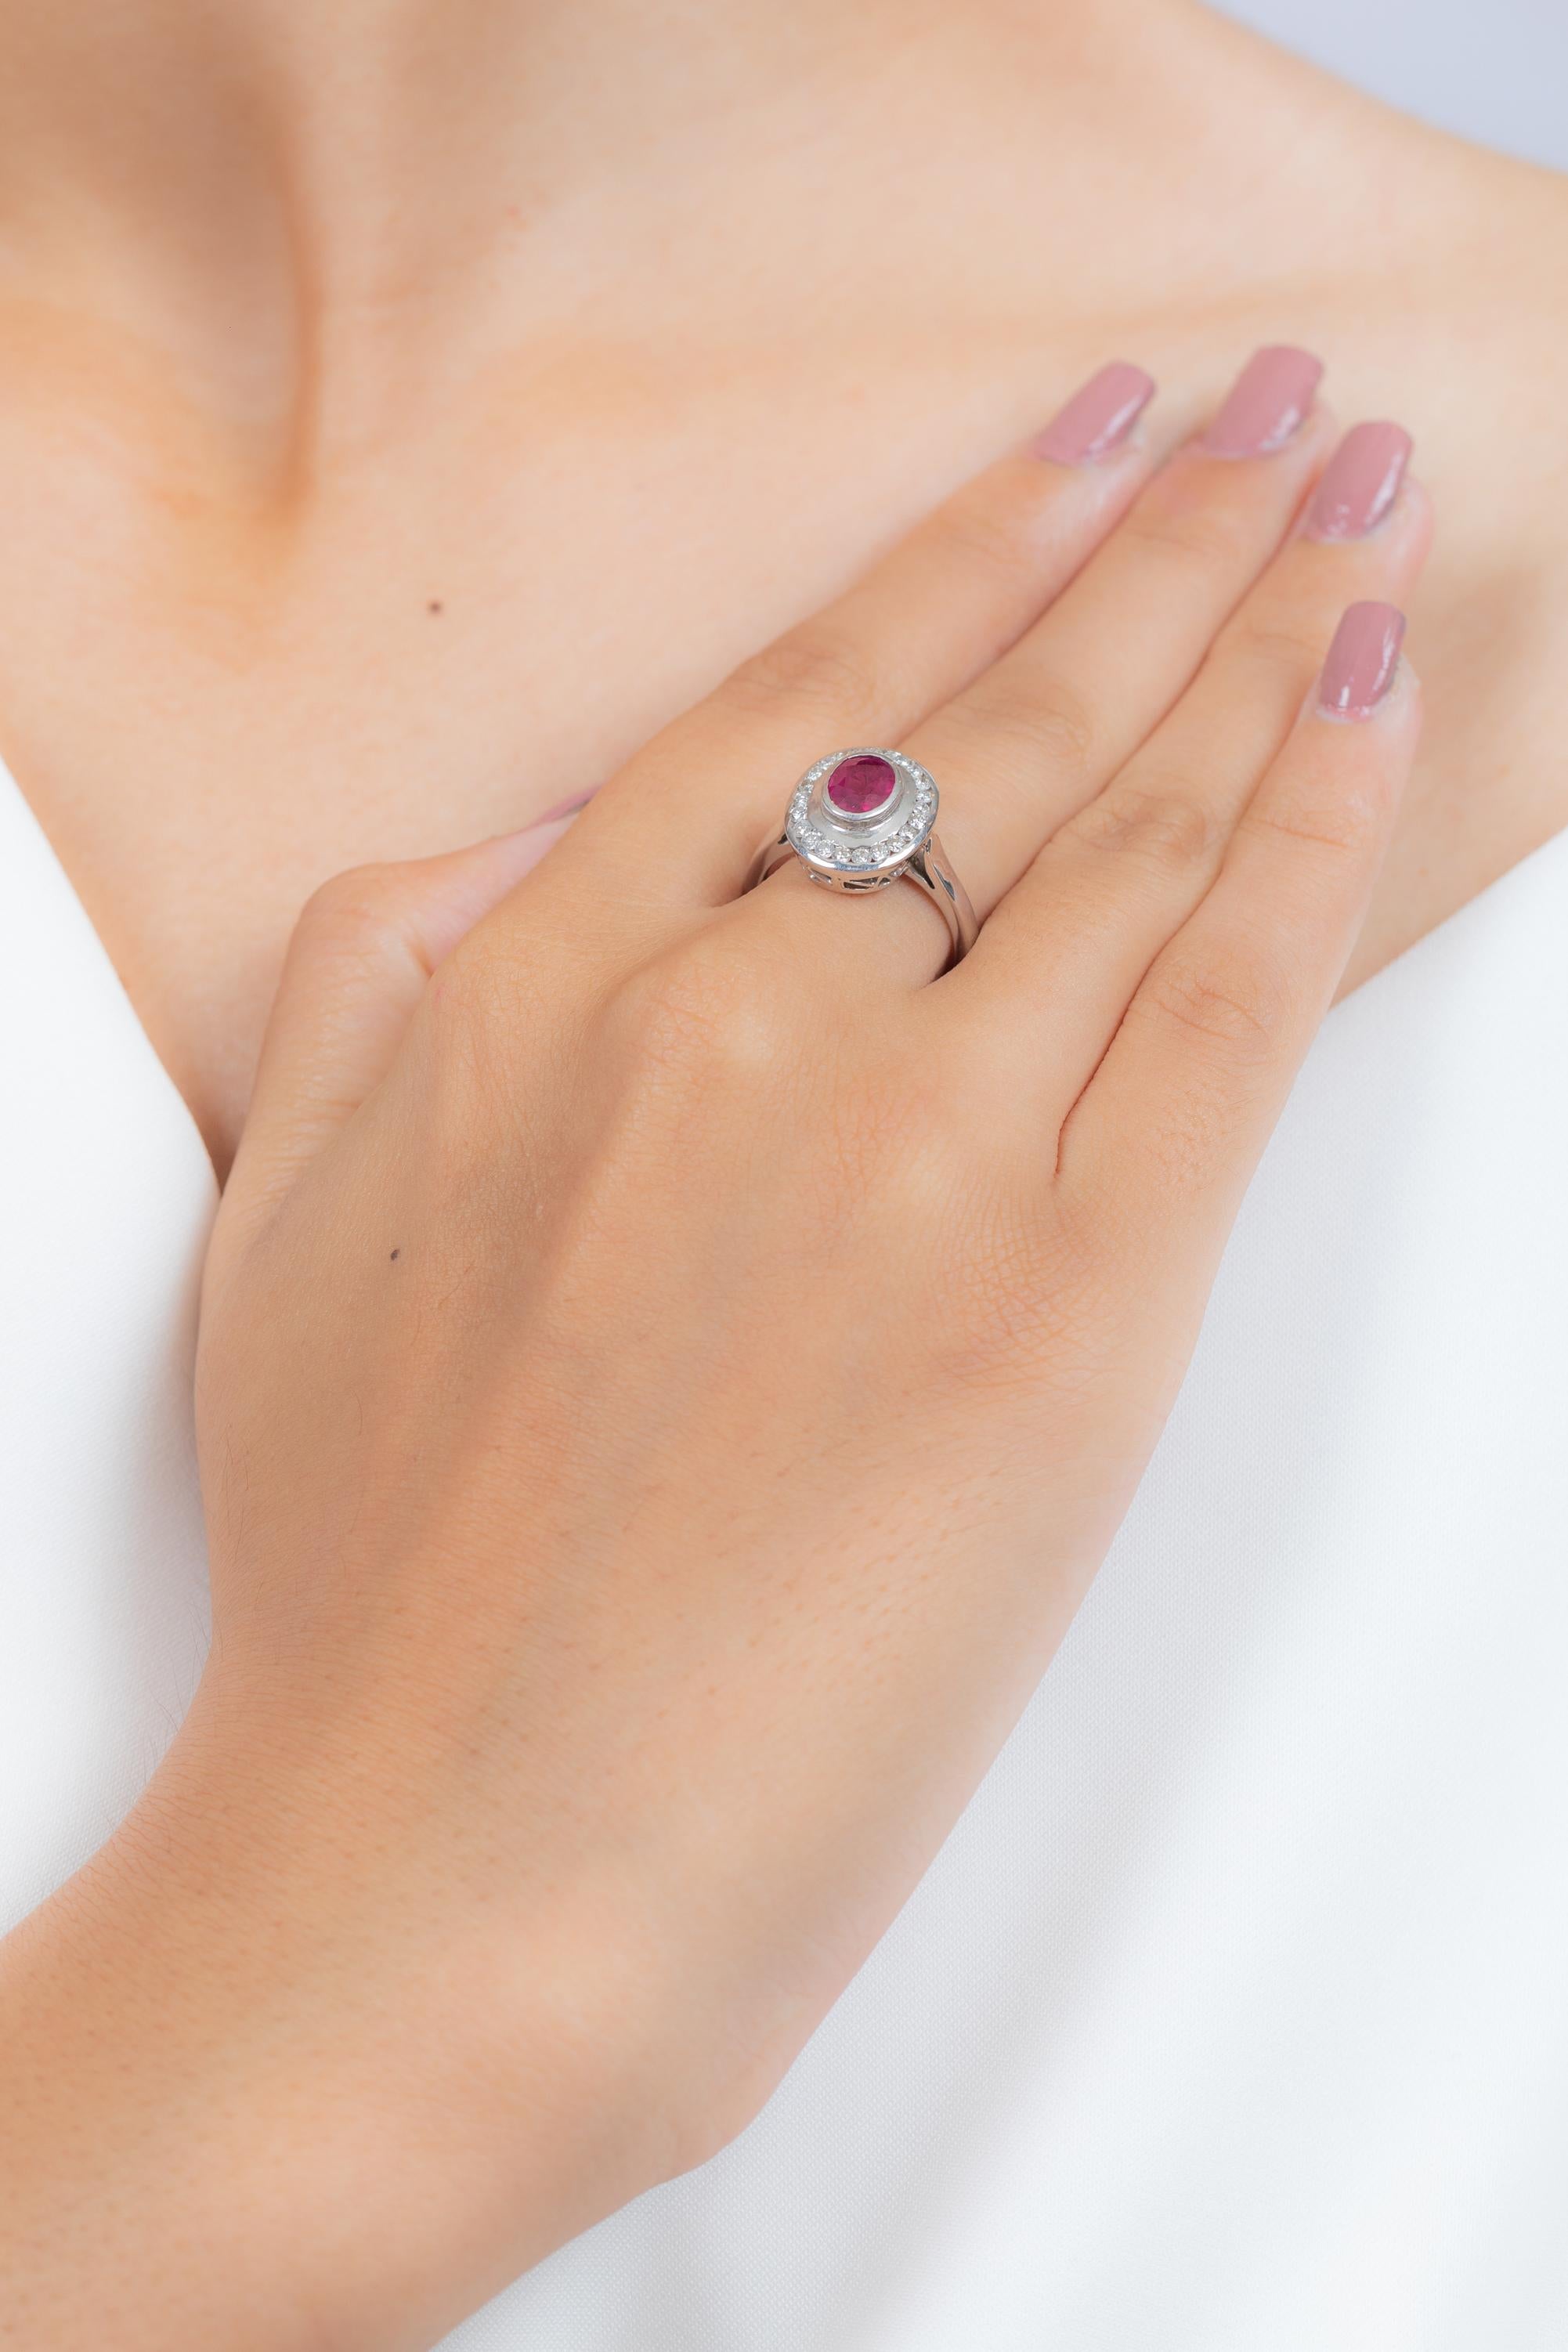 For Sale:  Bezel Set Oval Shape Ruby Diamond Cocktail Ring in 18K White Gold 7